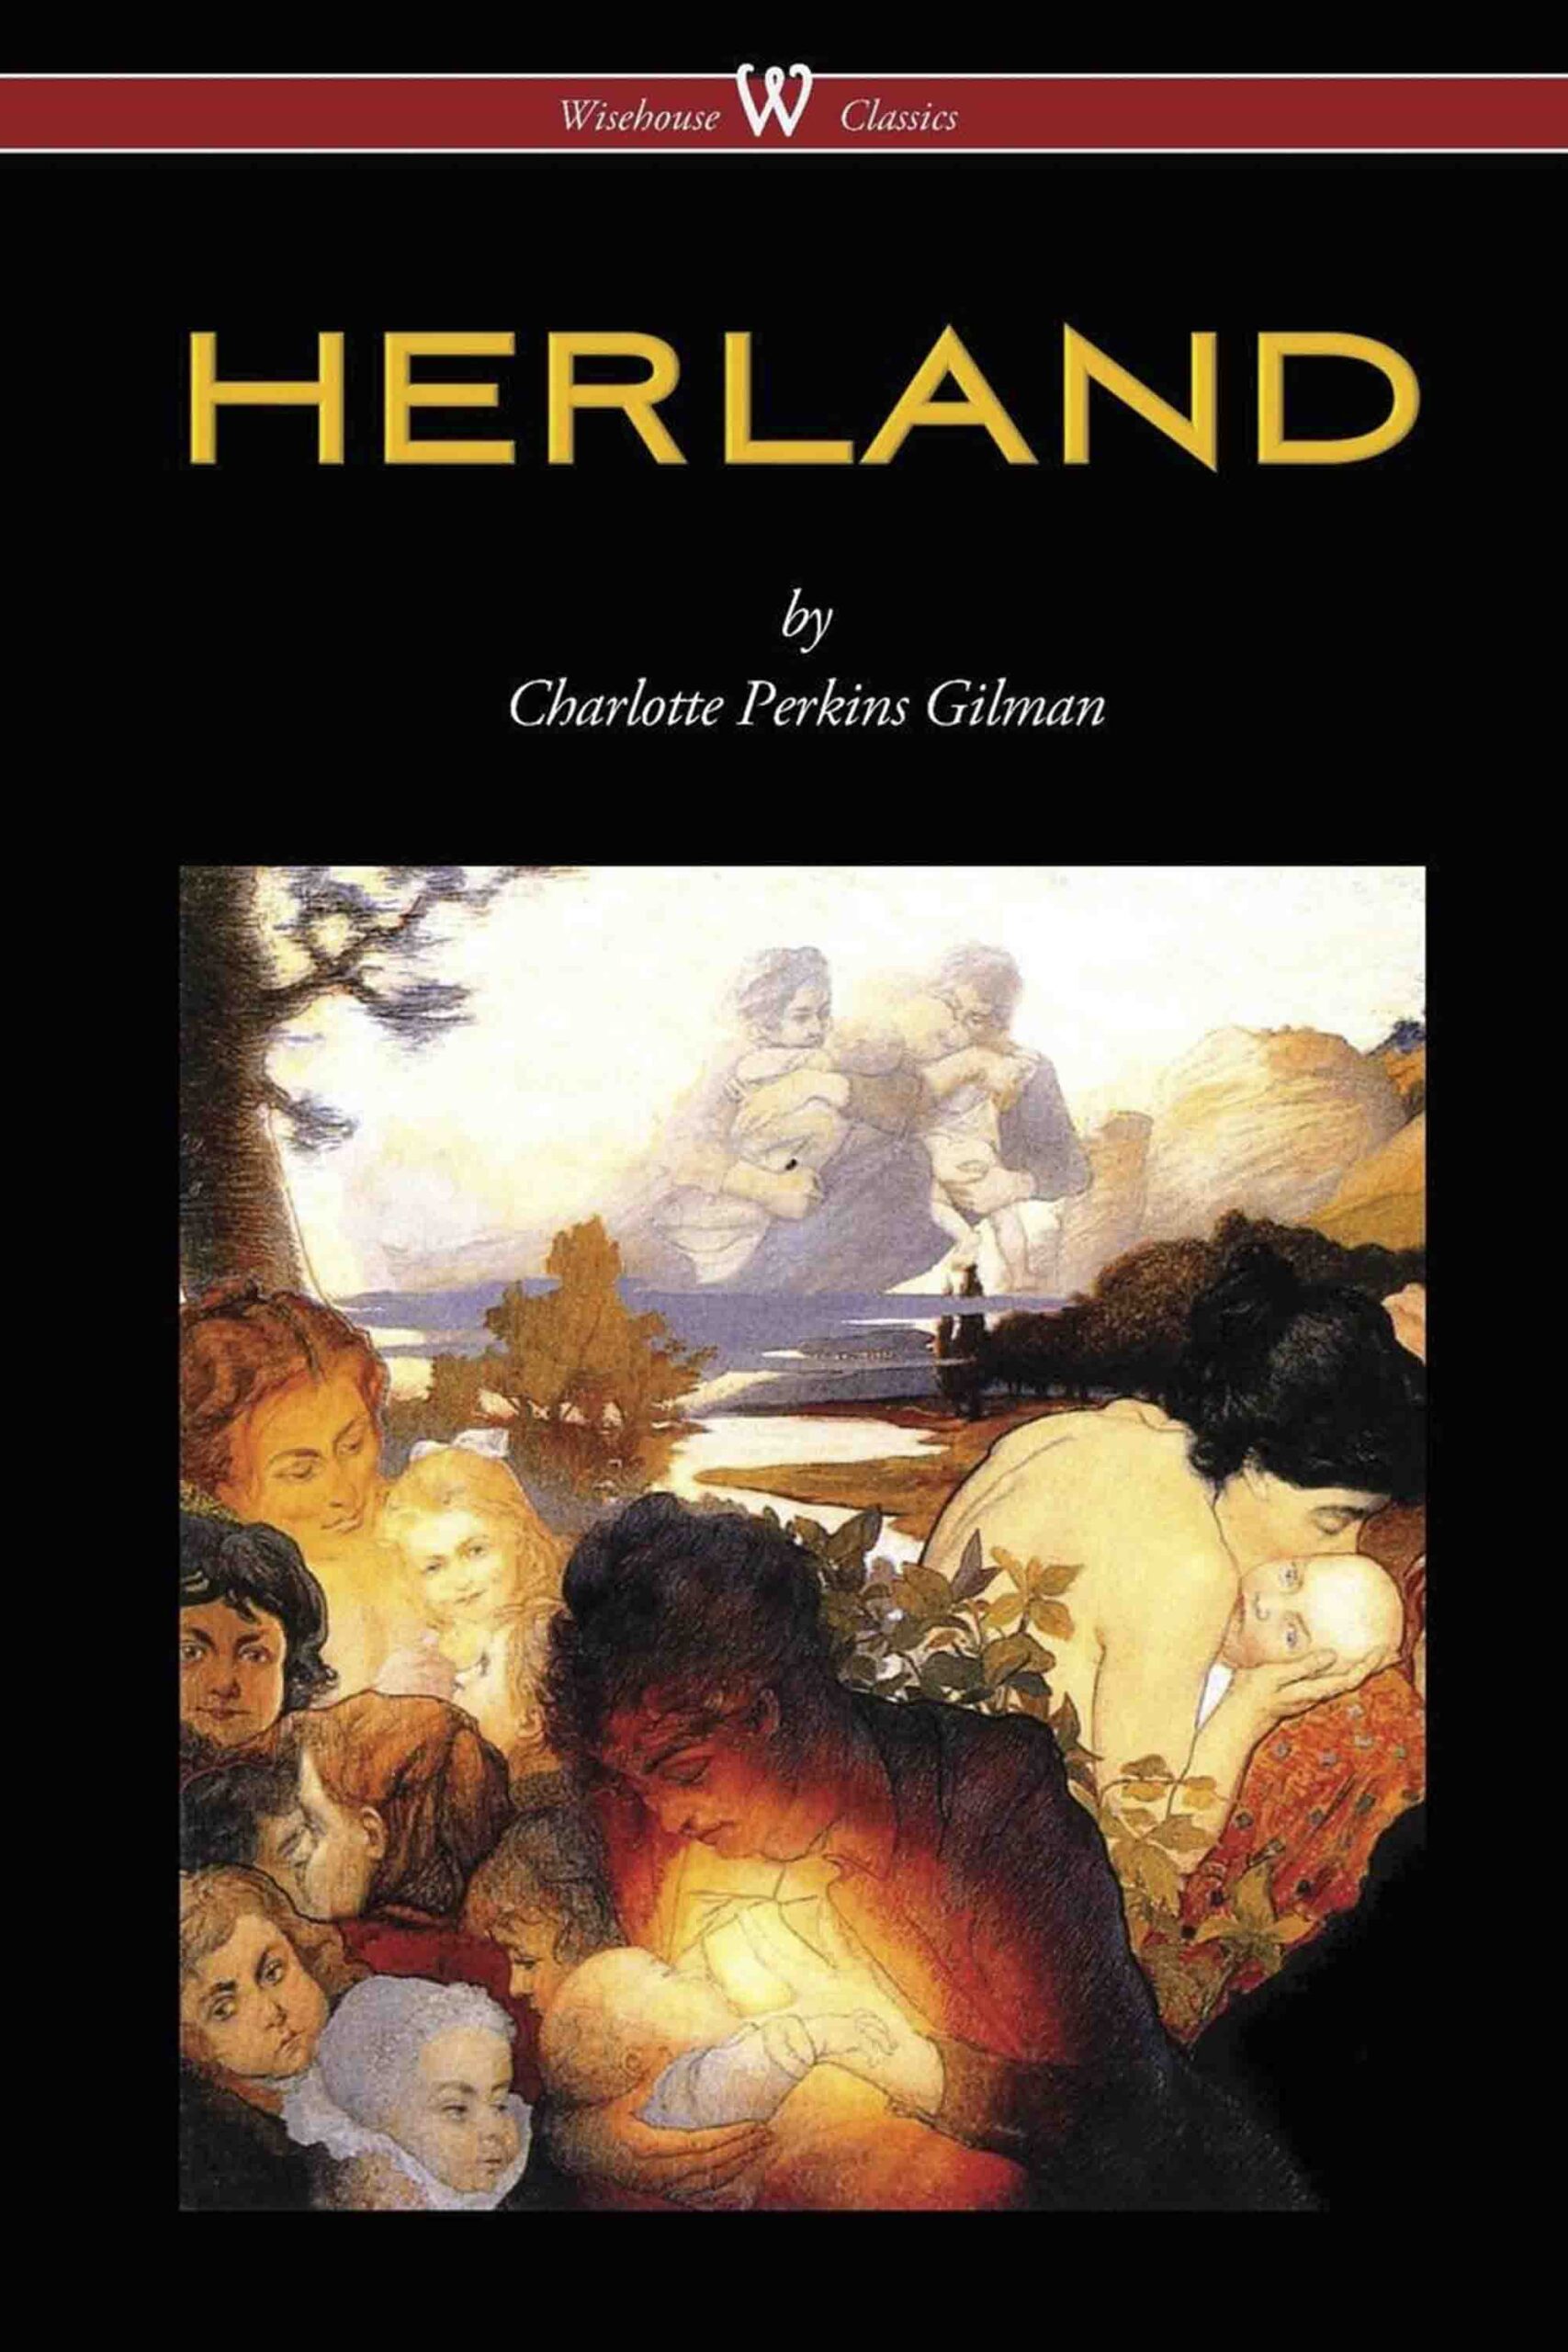 HERLAND (Wisehouse Classics – Original Edition 1909-1916)